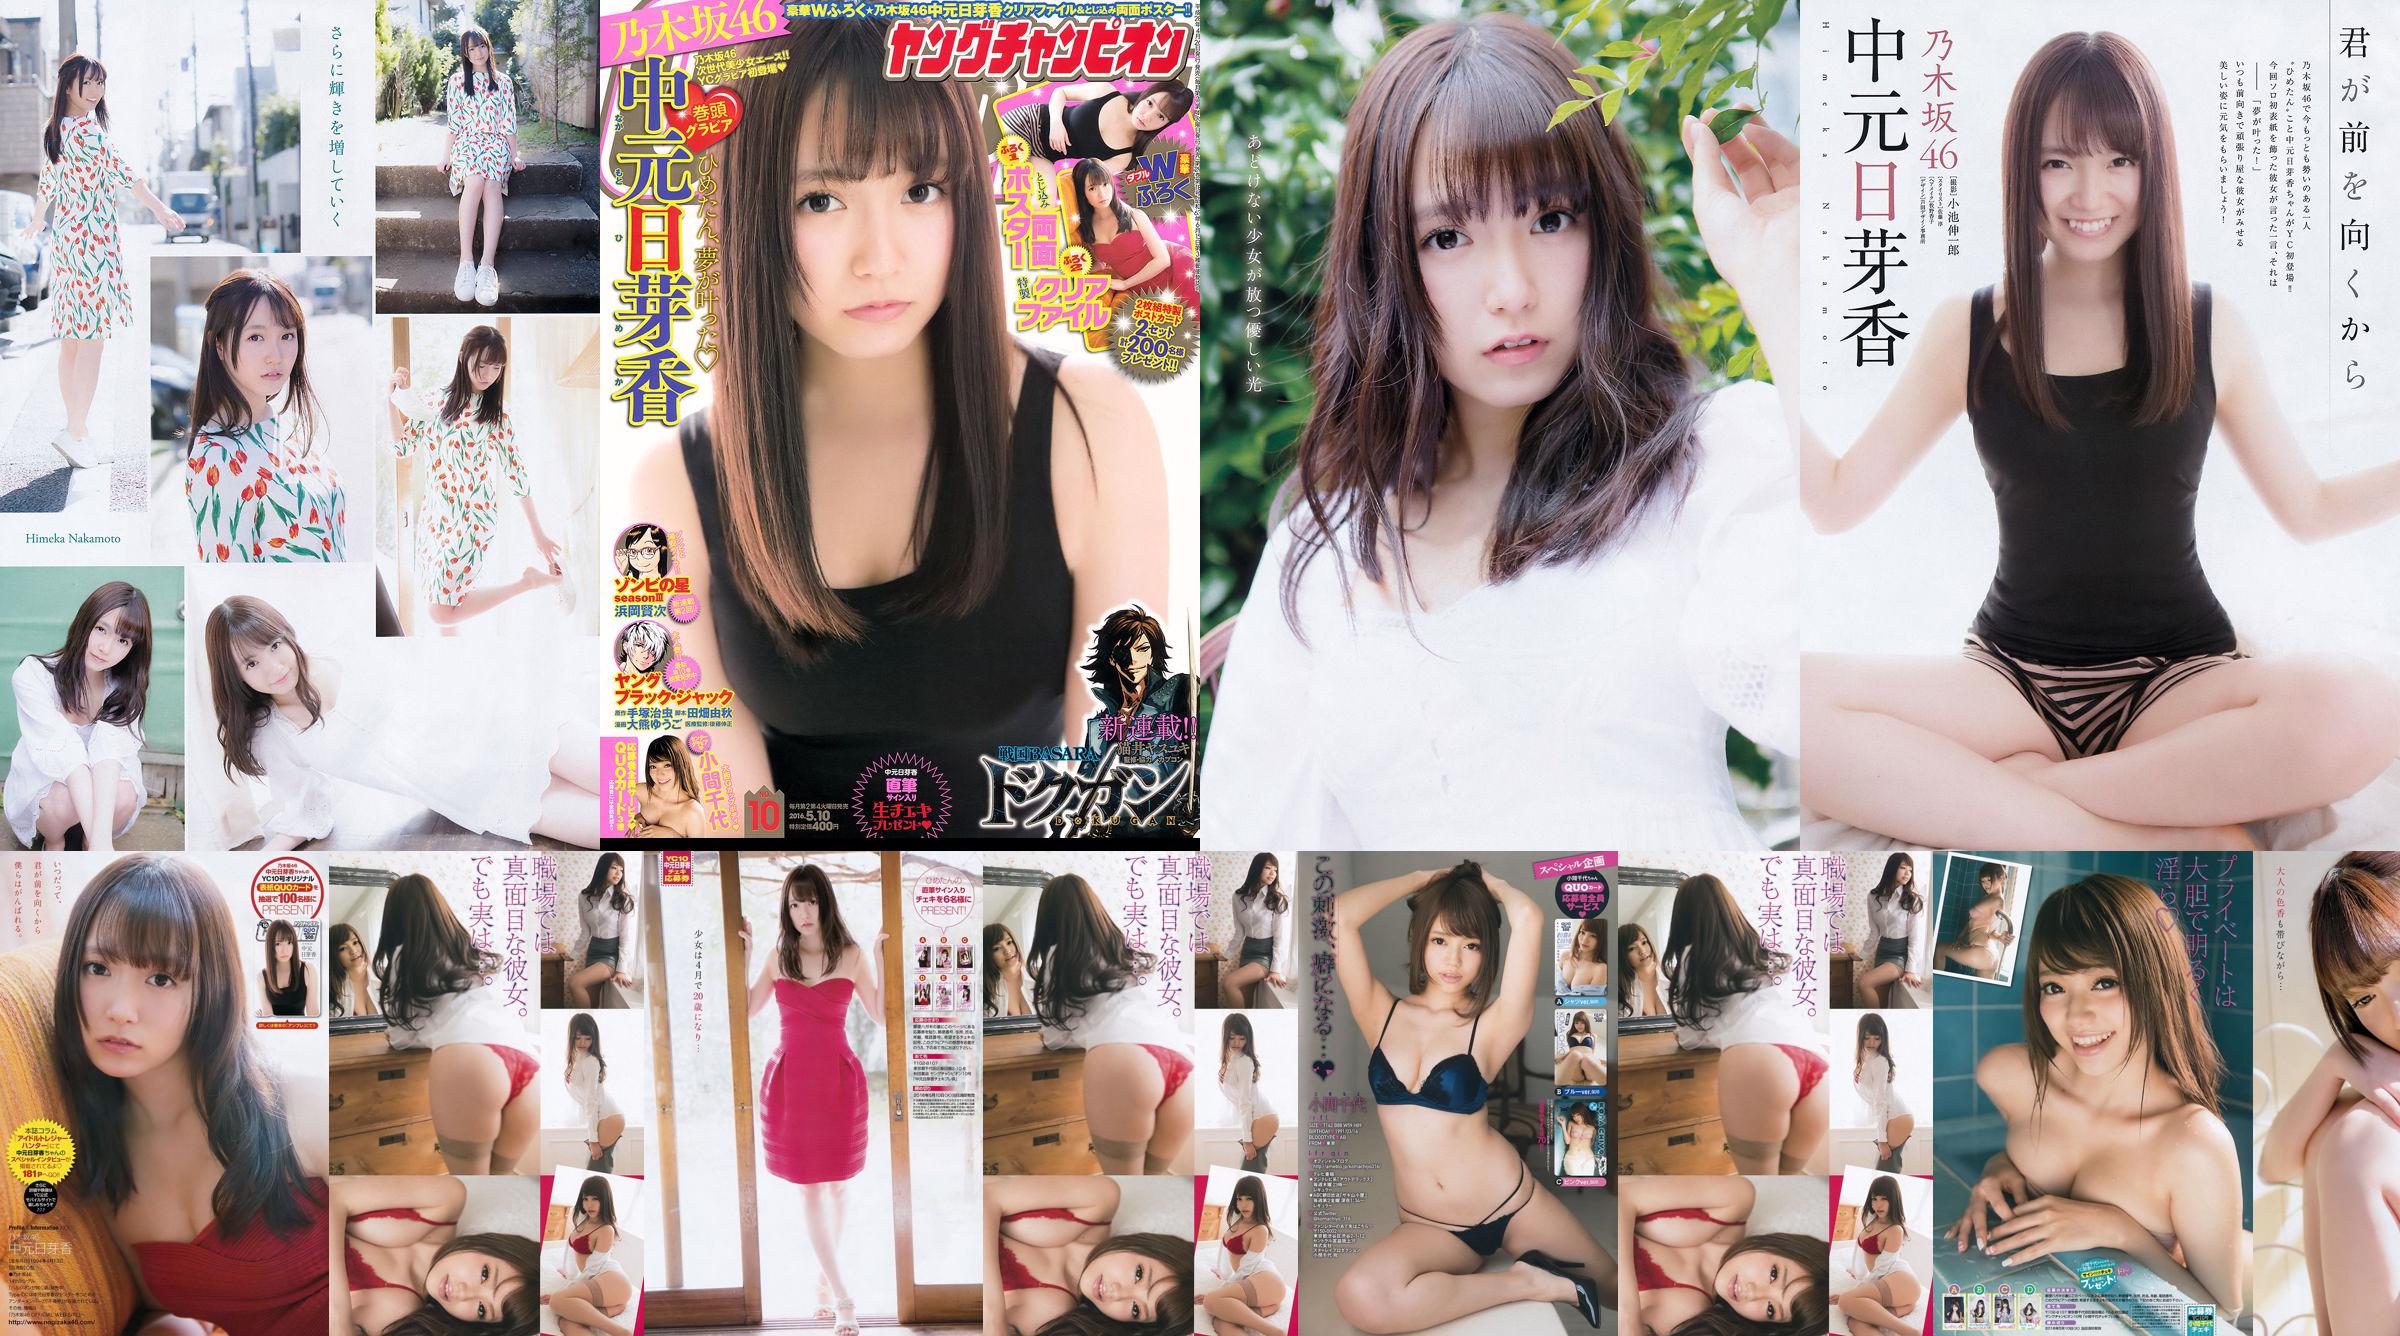 [Jeune Champion] Nakamoto Nichiko Koma Chiyo 2016 Magazine photo n ° 10 No.9c06b9 Page 3